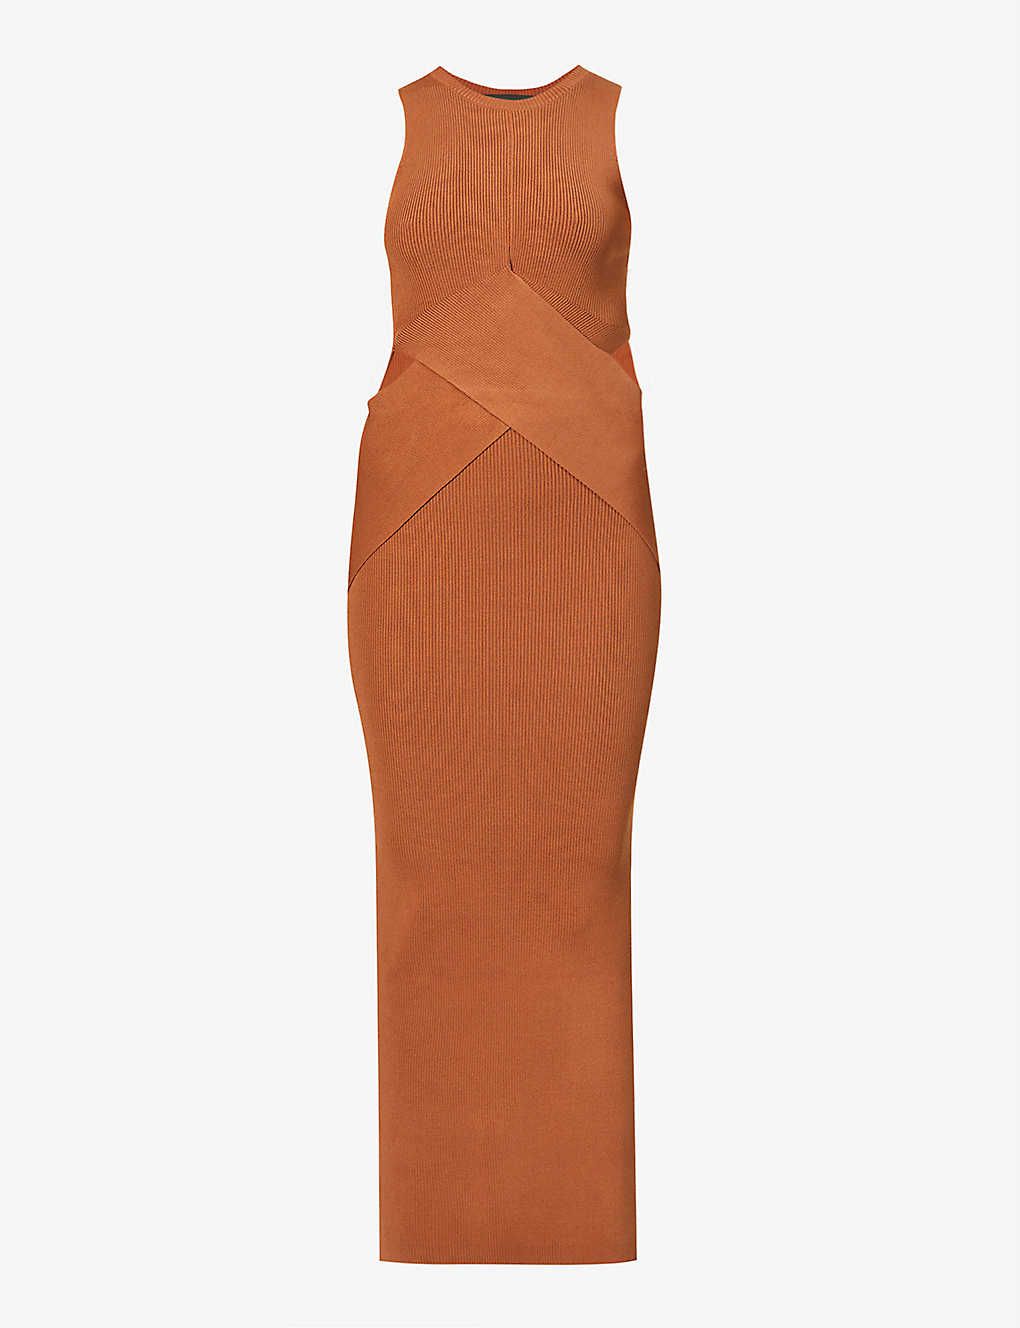 Josephine cut-out stretch-knit midi dress | Selfridges